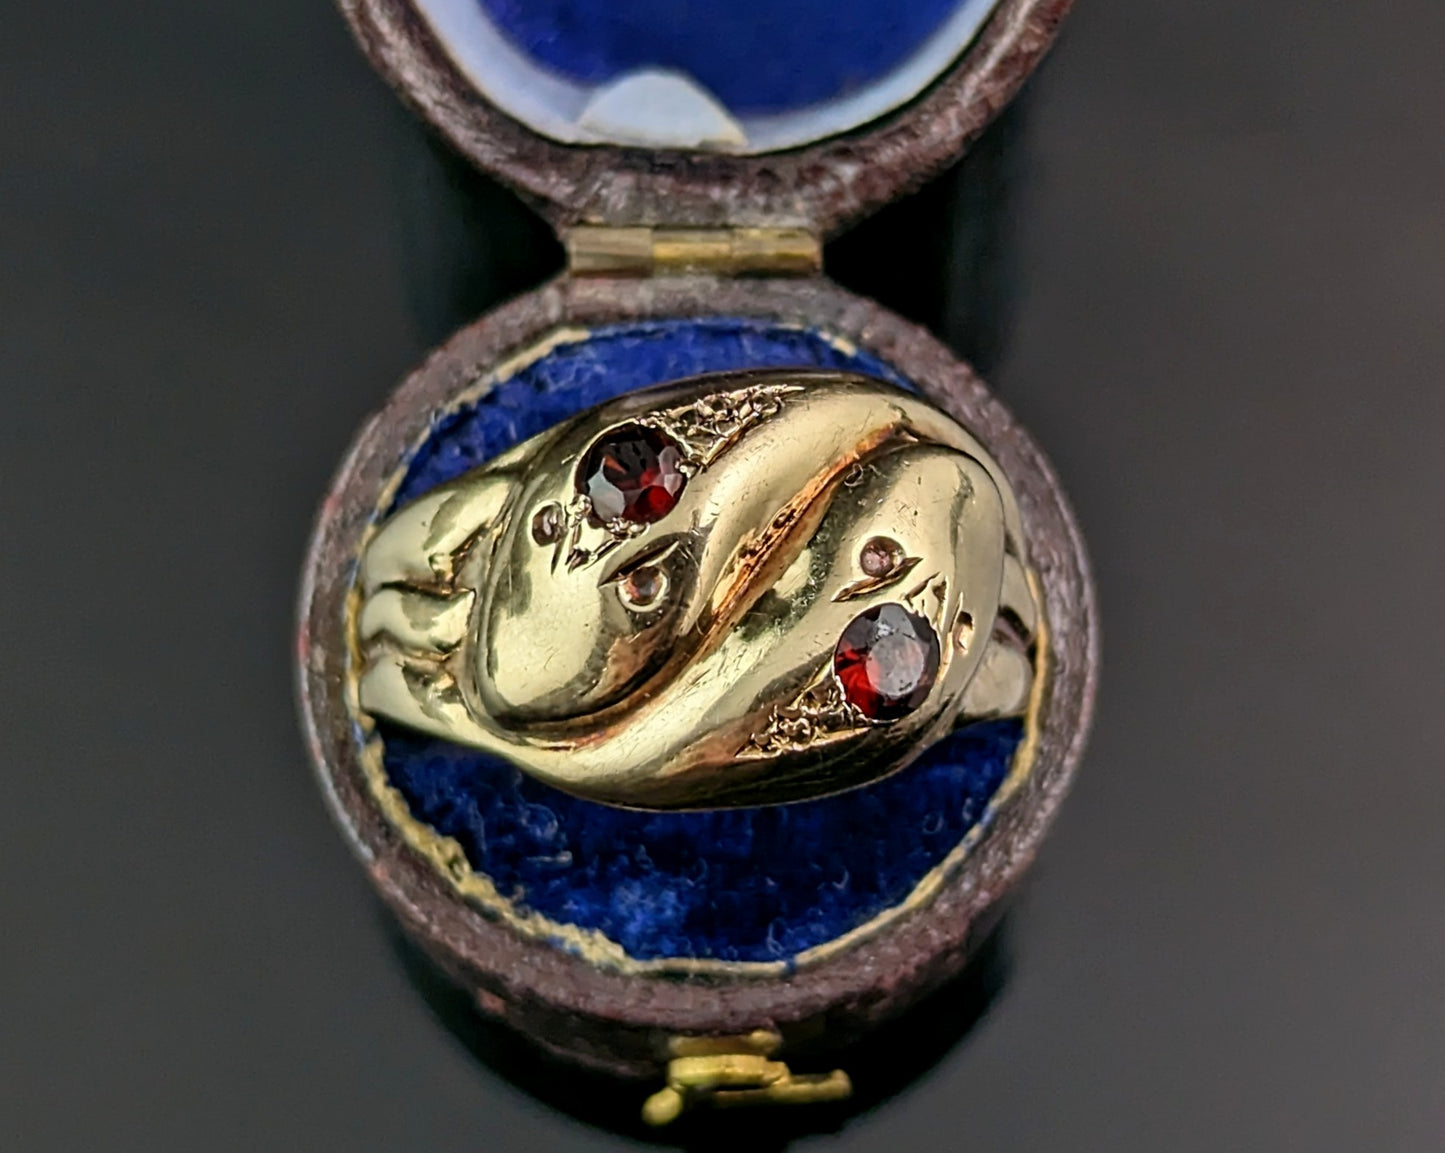 Vintage 9ct gold Garnet snake ring, Victorian style